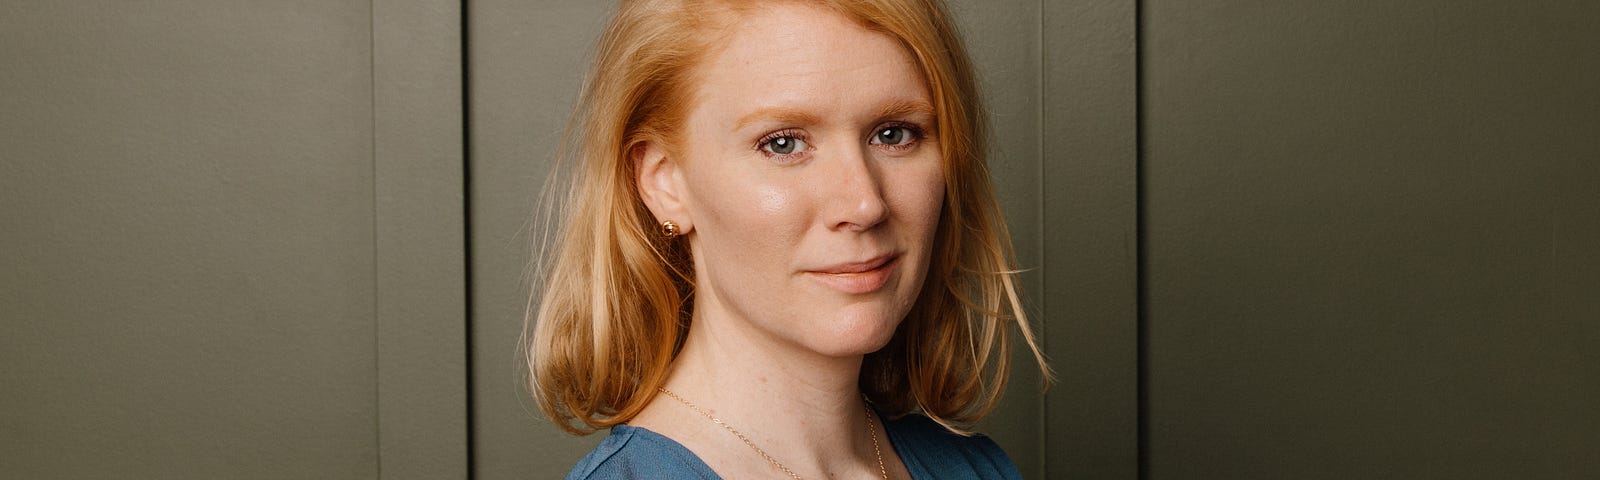 Laura McGill: Human. Female. Ginger.